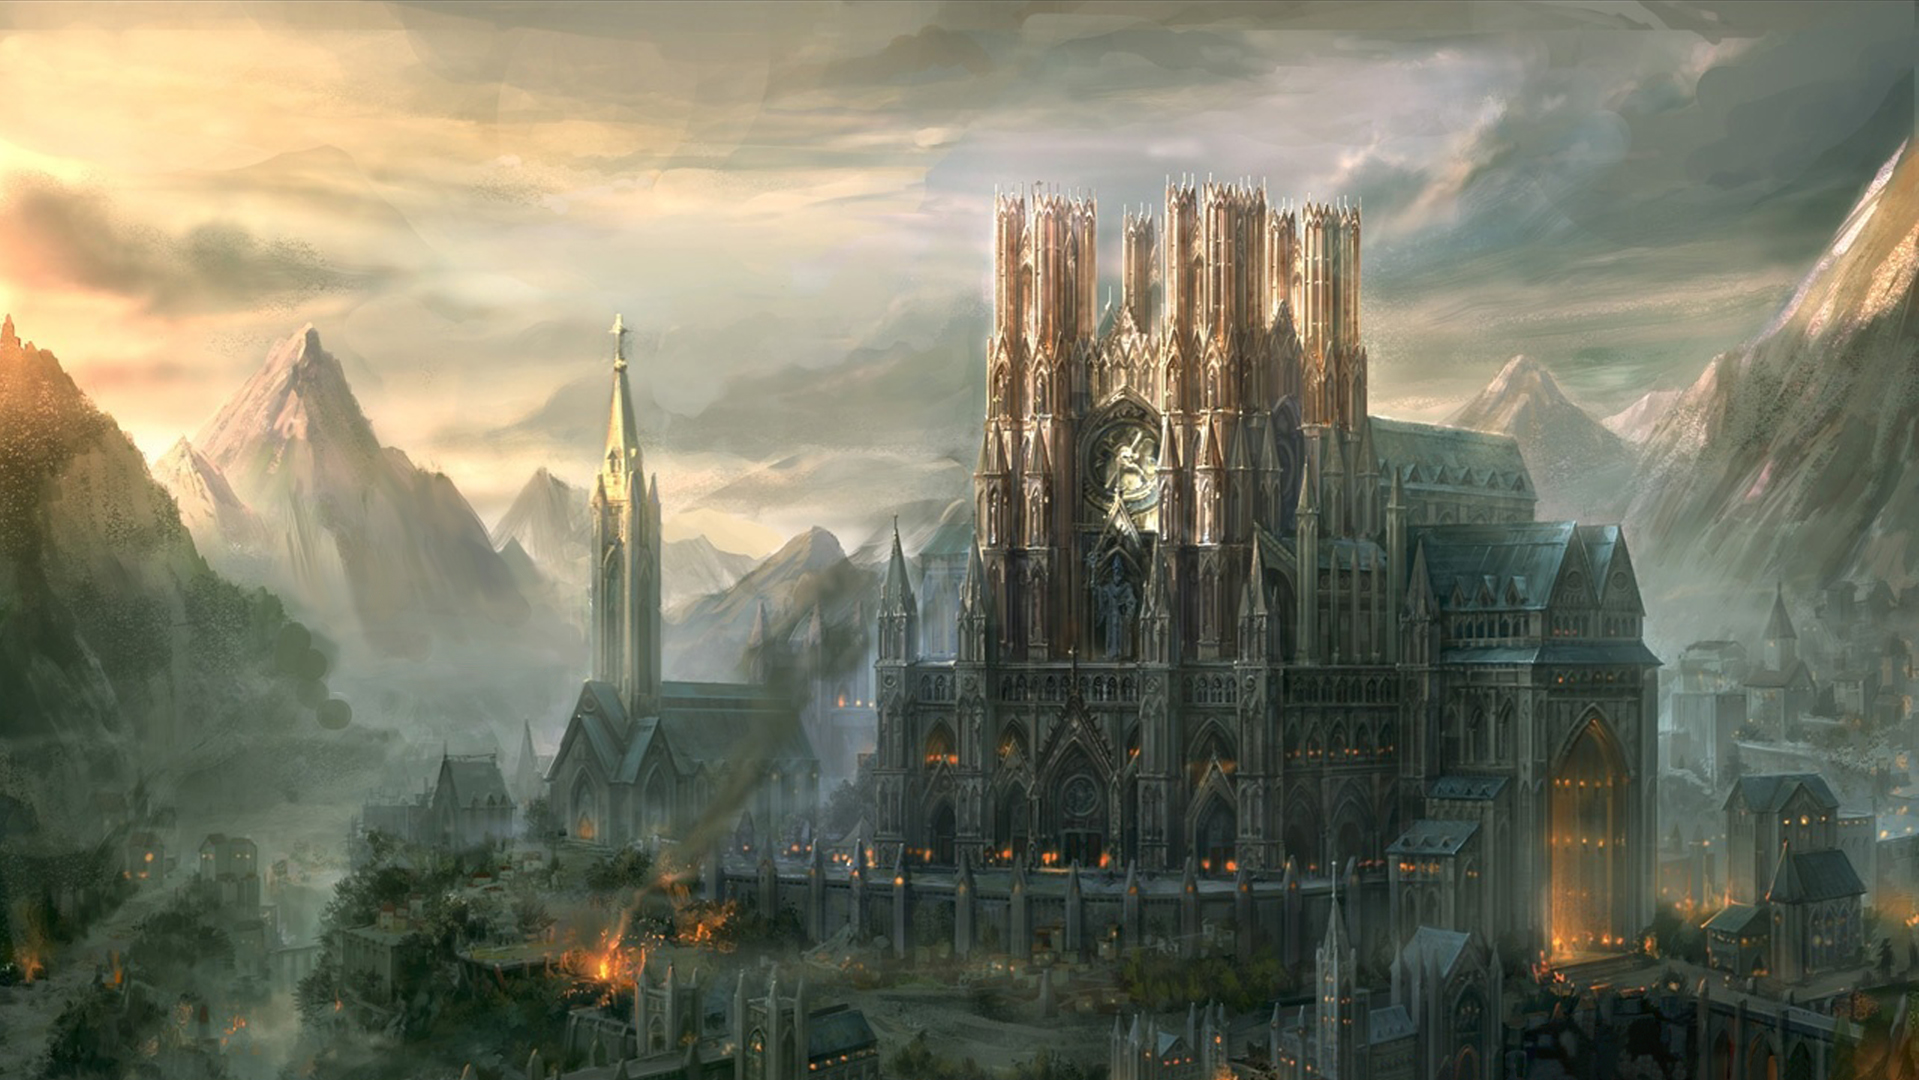 Hd desktop fantasy city kingdom under fire download free picture